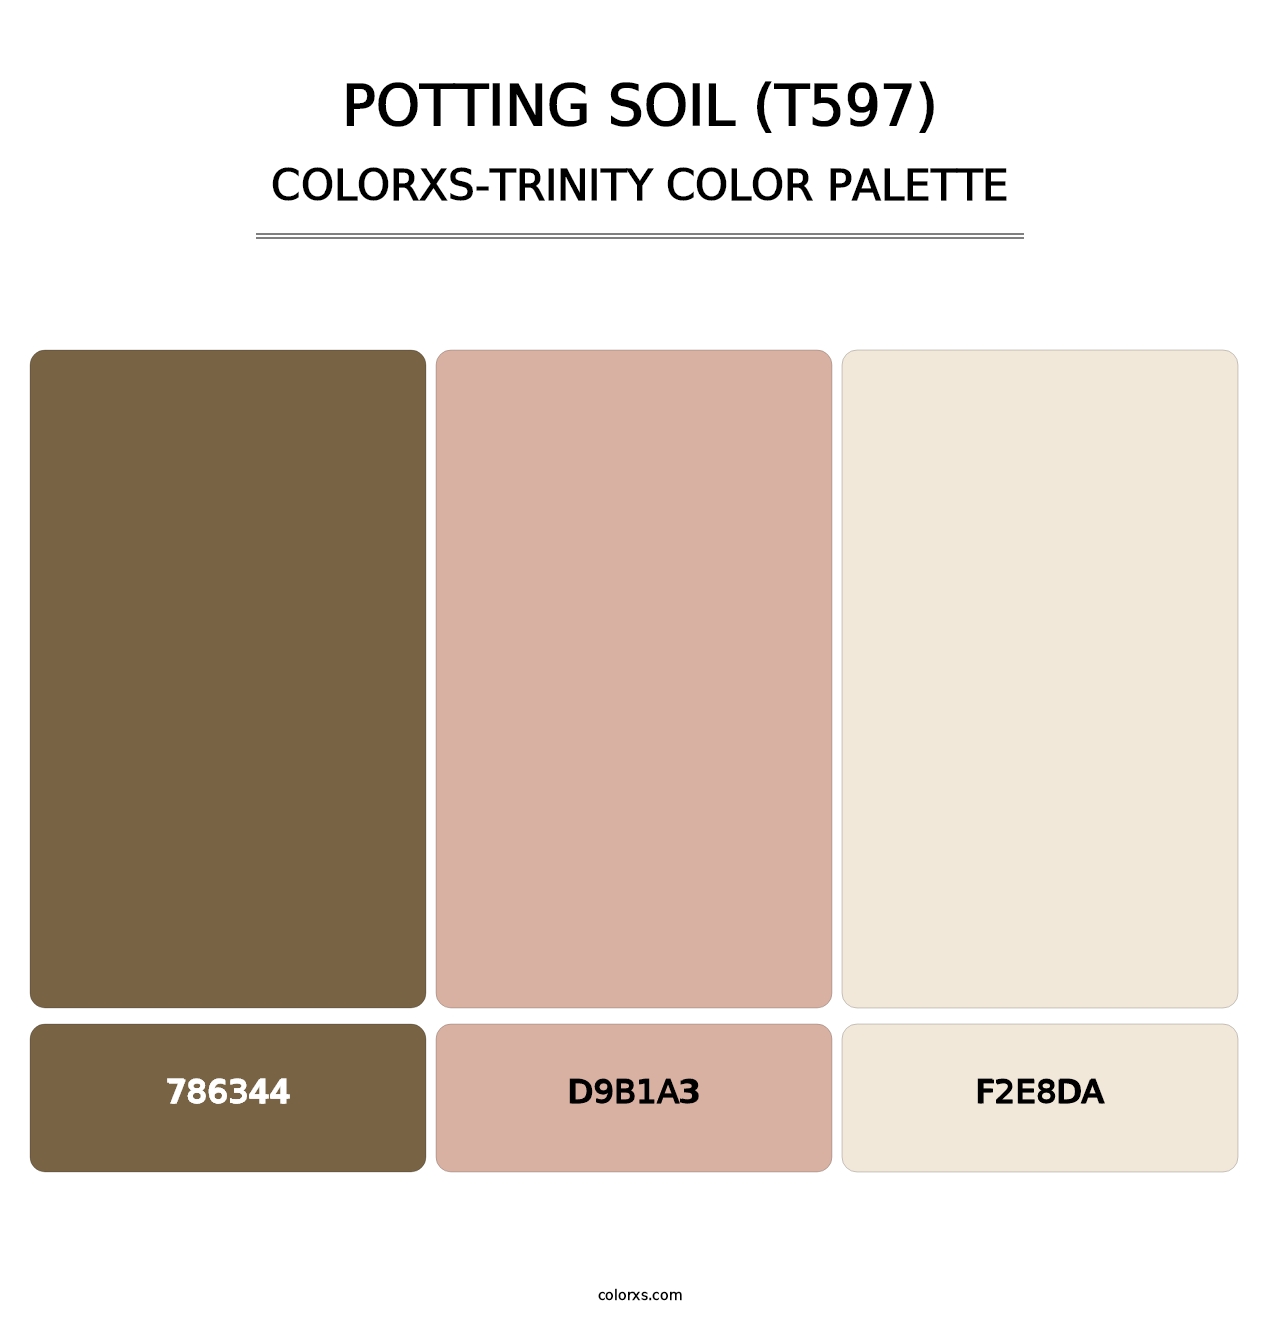 Potting Soil (T597) - Colorxs Trinity Palette